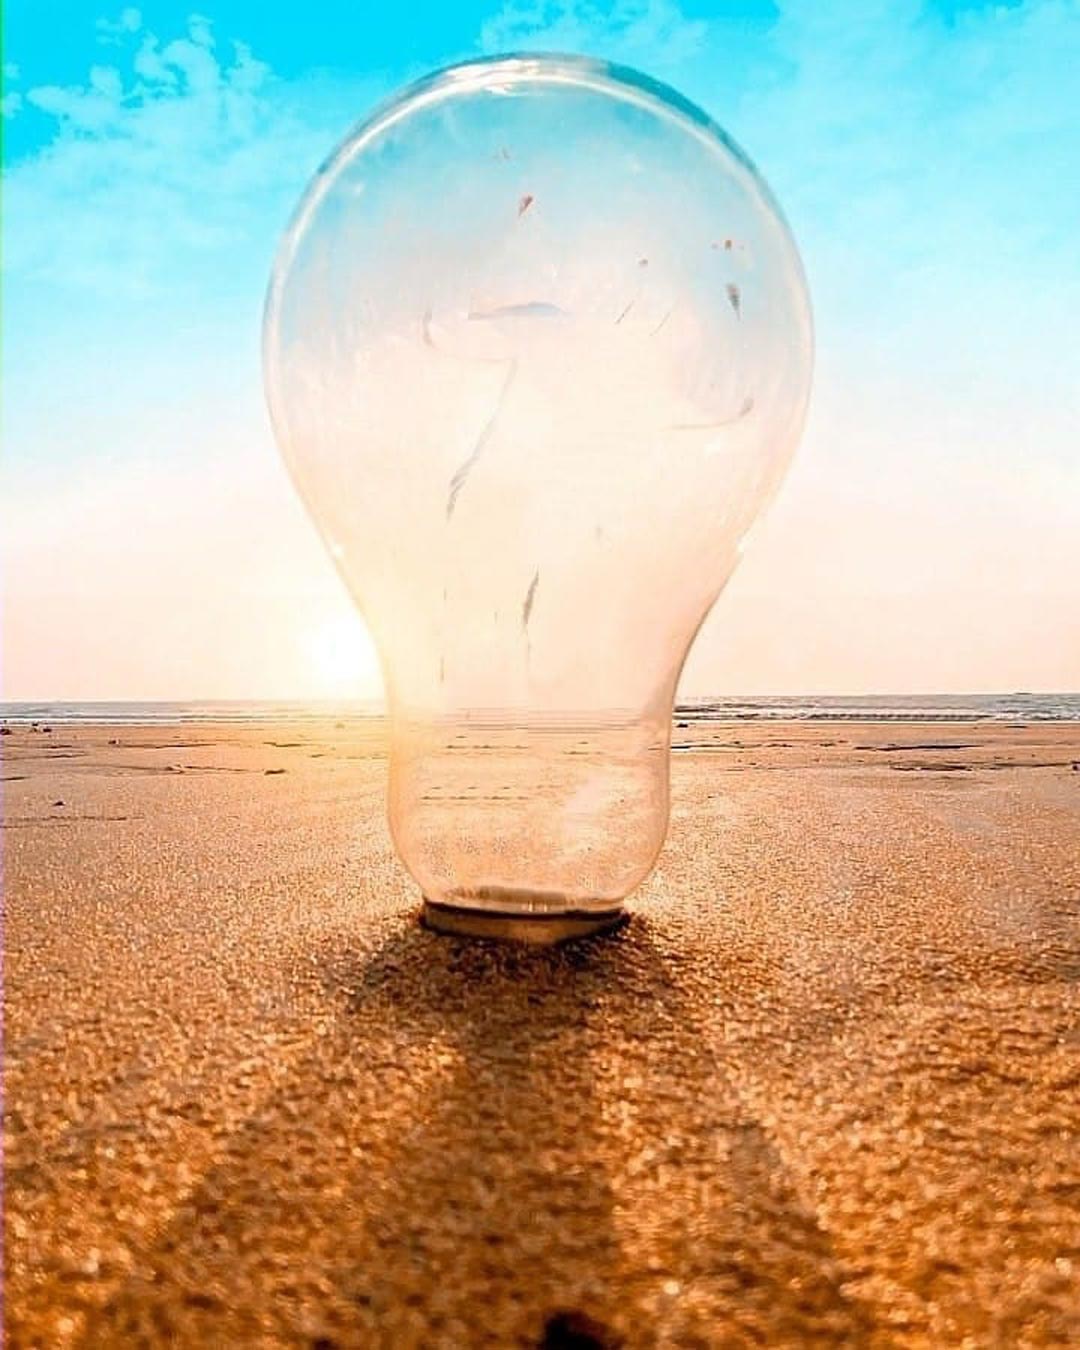 The Light Bulb Picsart Background Free Stock Image